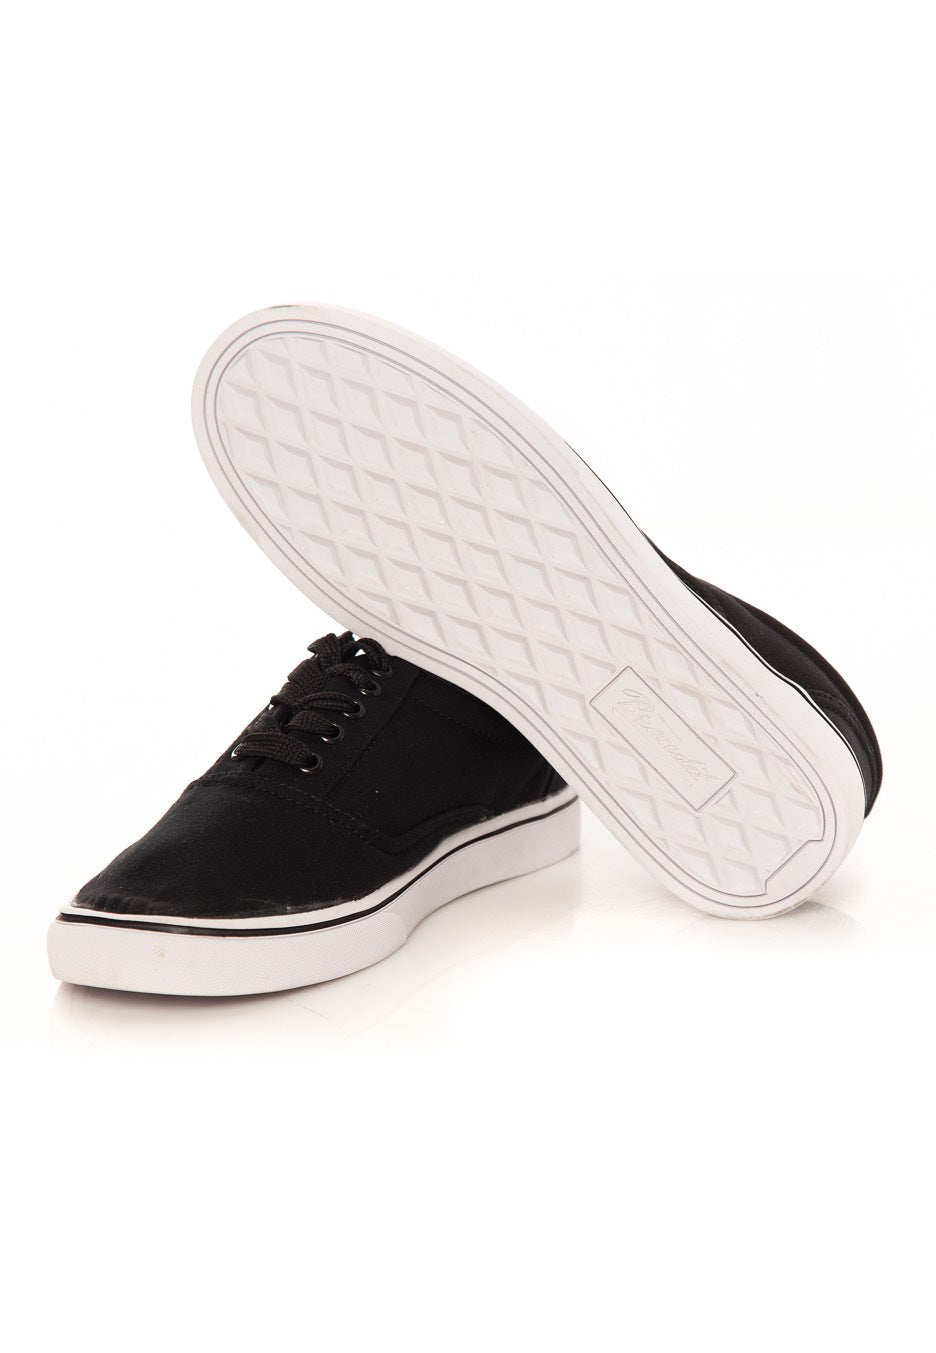 Brandit - Bayside Black/White - Shoes